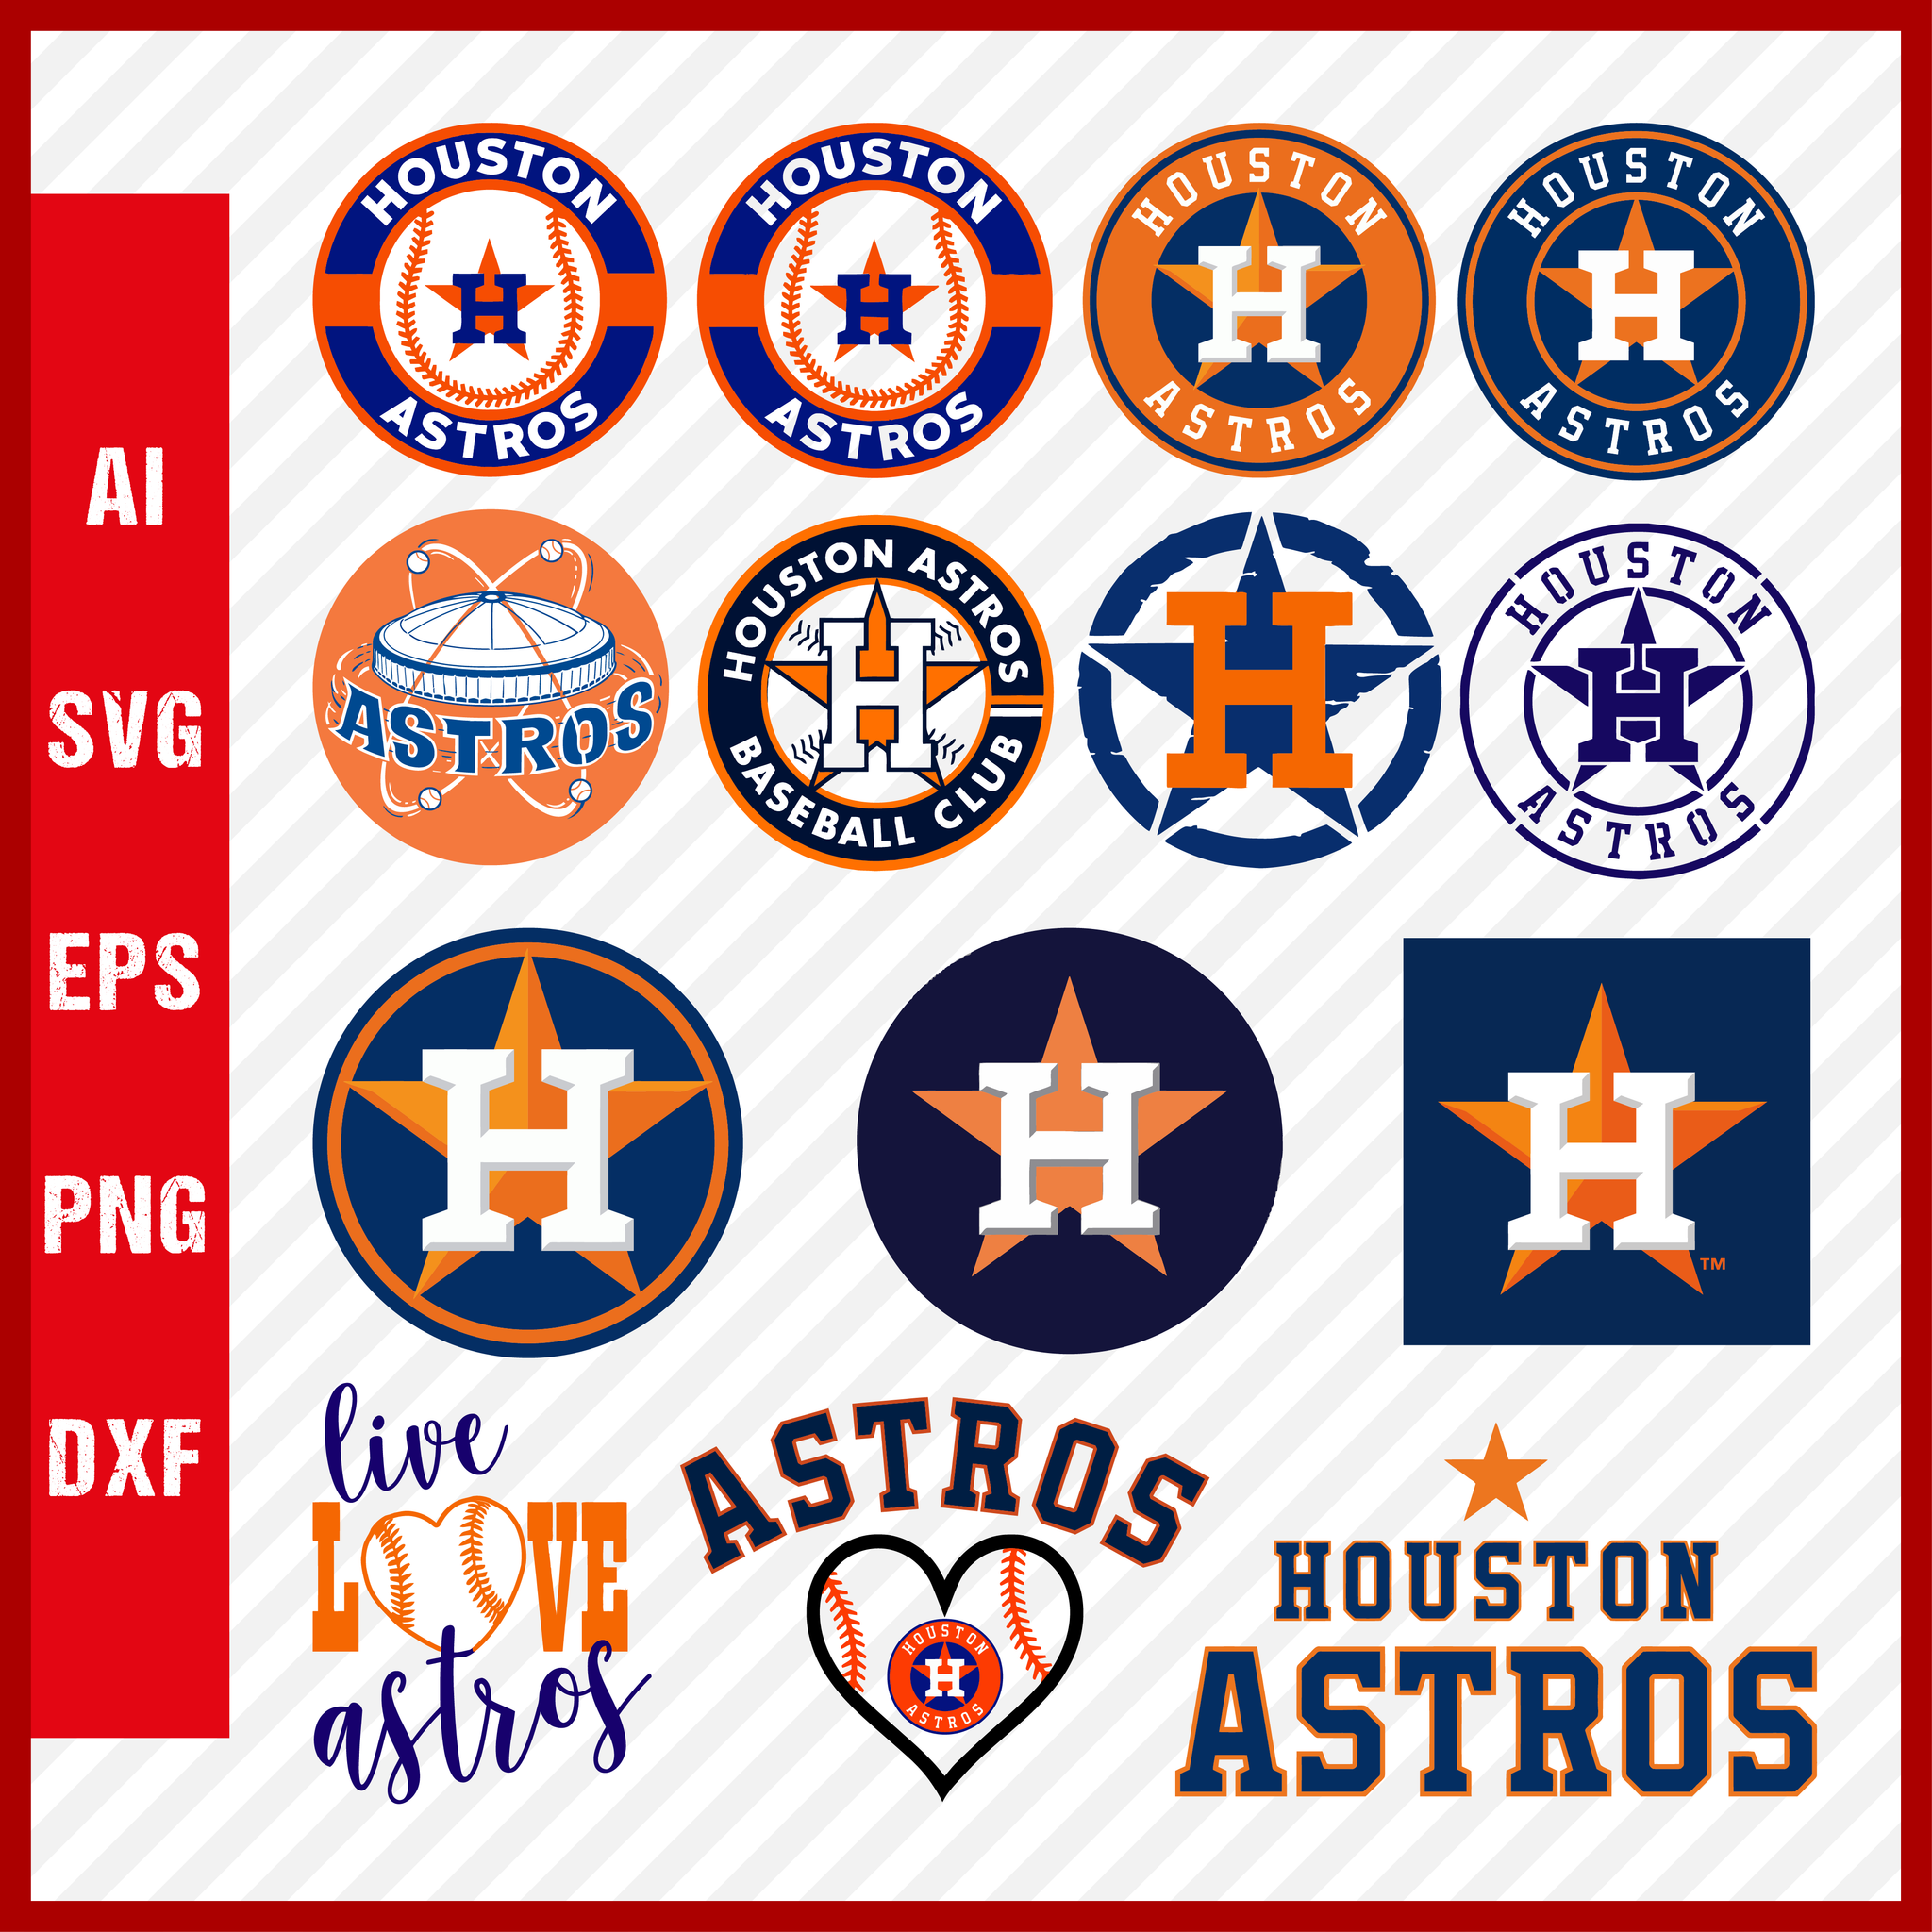 Houston Astros SVG - Houston Astros Logo MLB Baseball SVG cut file